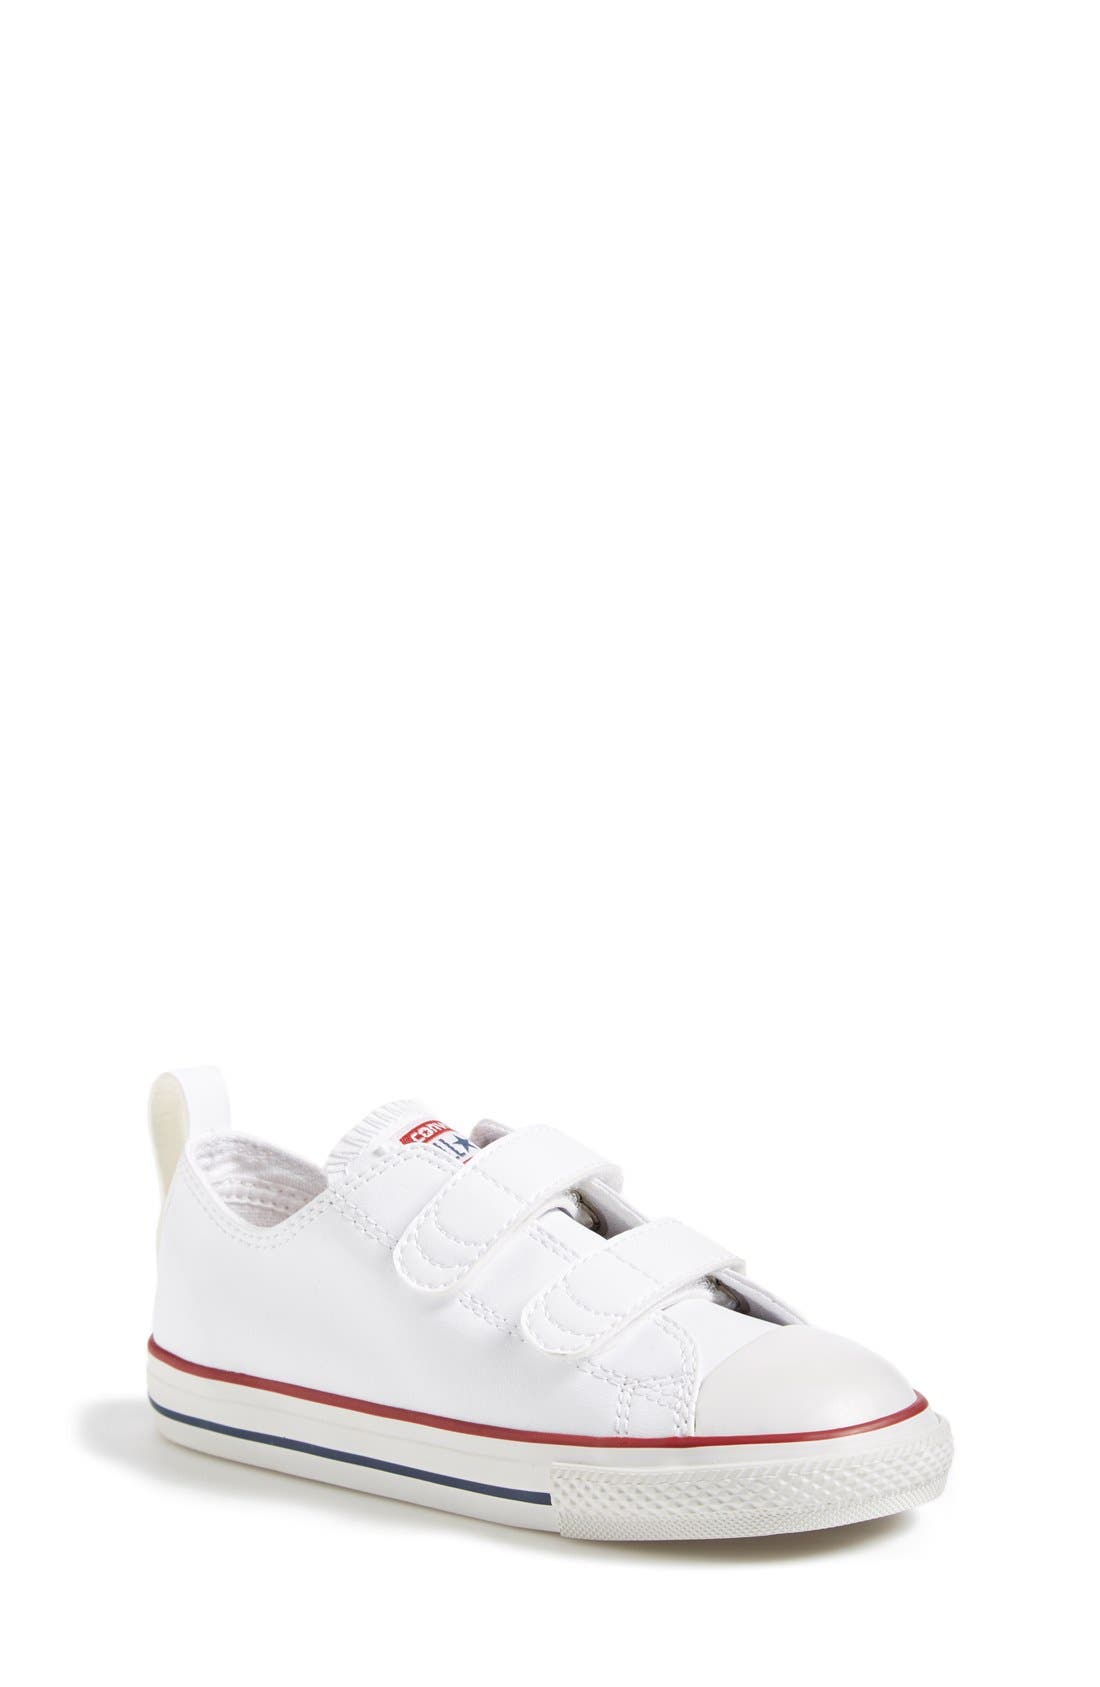 converse strap shoes white